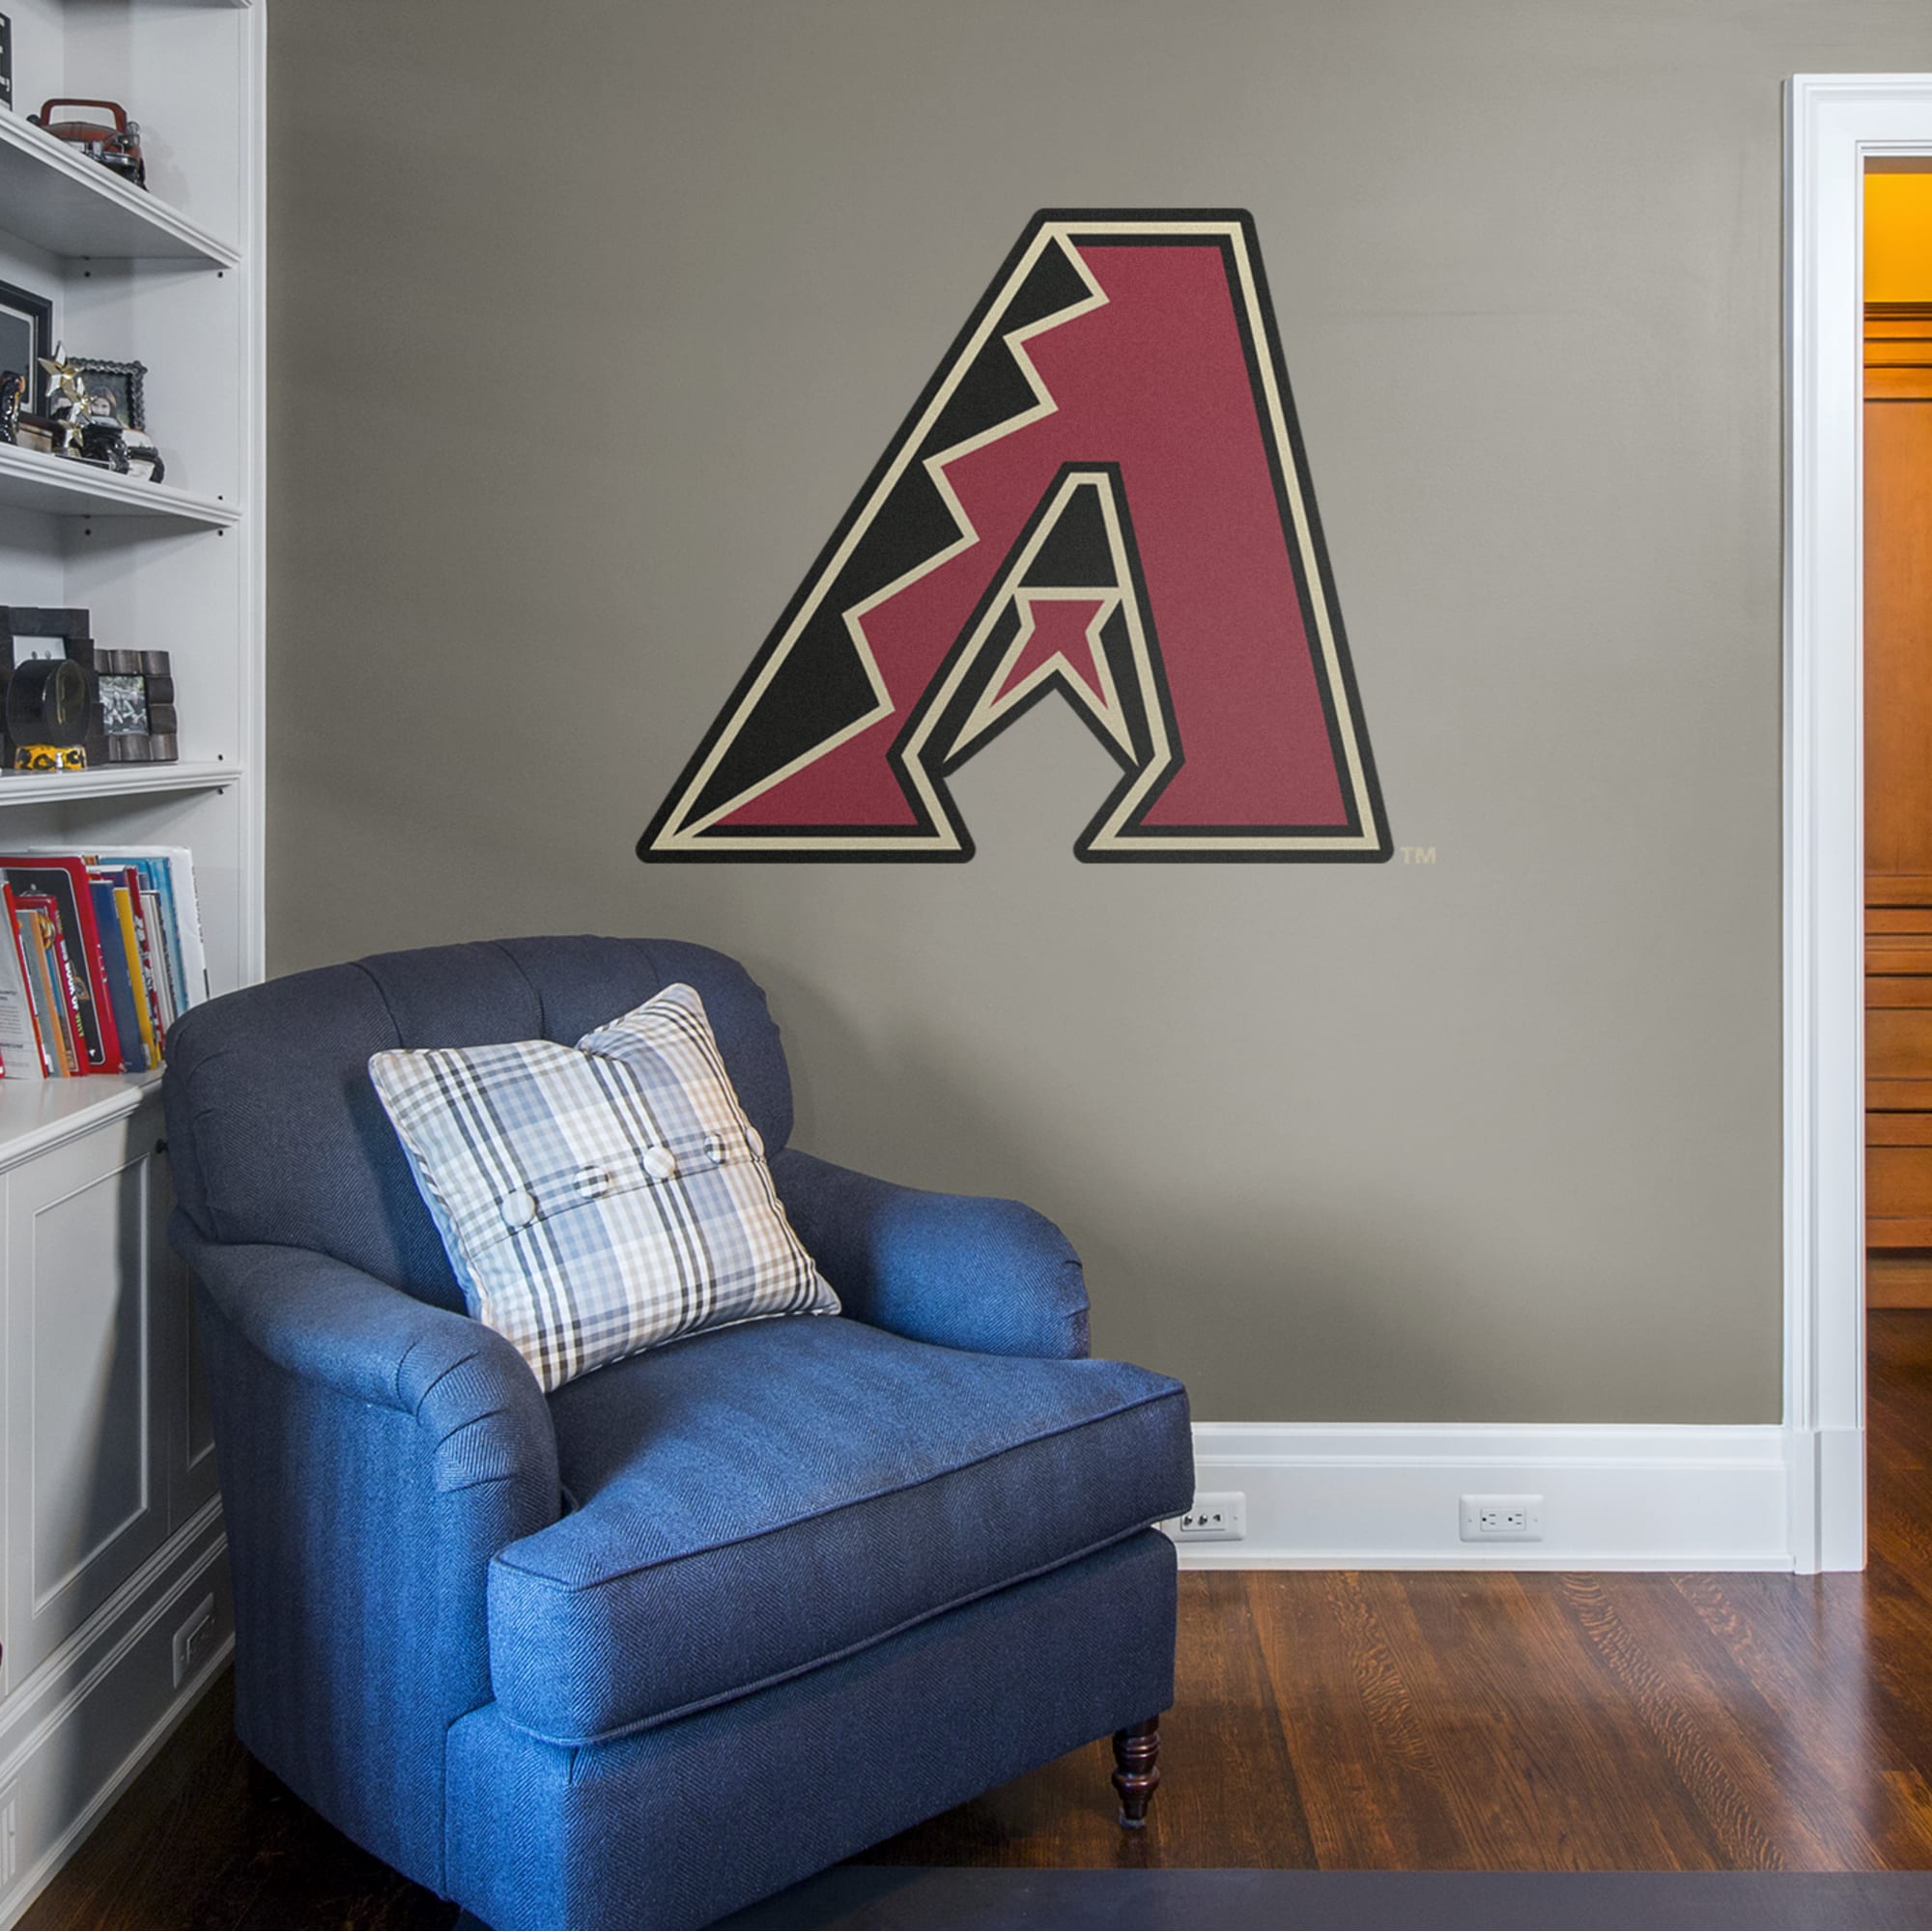 Arizona Diamondbacks: Logo - Officially Licensed MLB Removable Wall Decal Giant Logo (45"W x 39"H) by Fathead | Vinyl